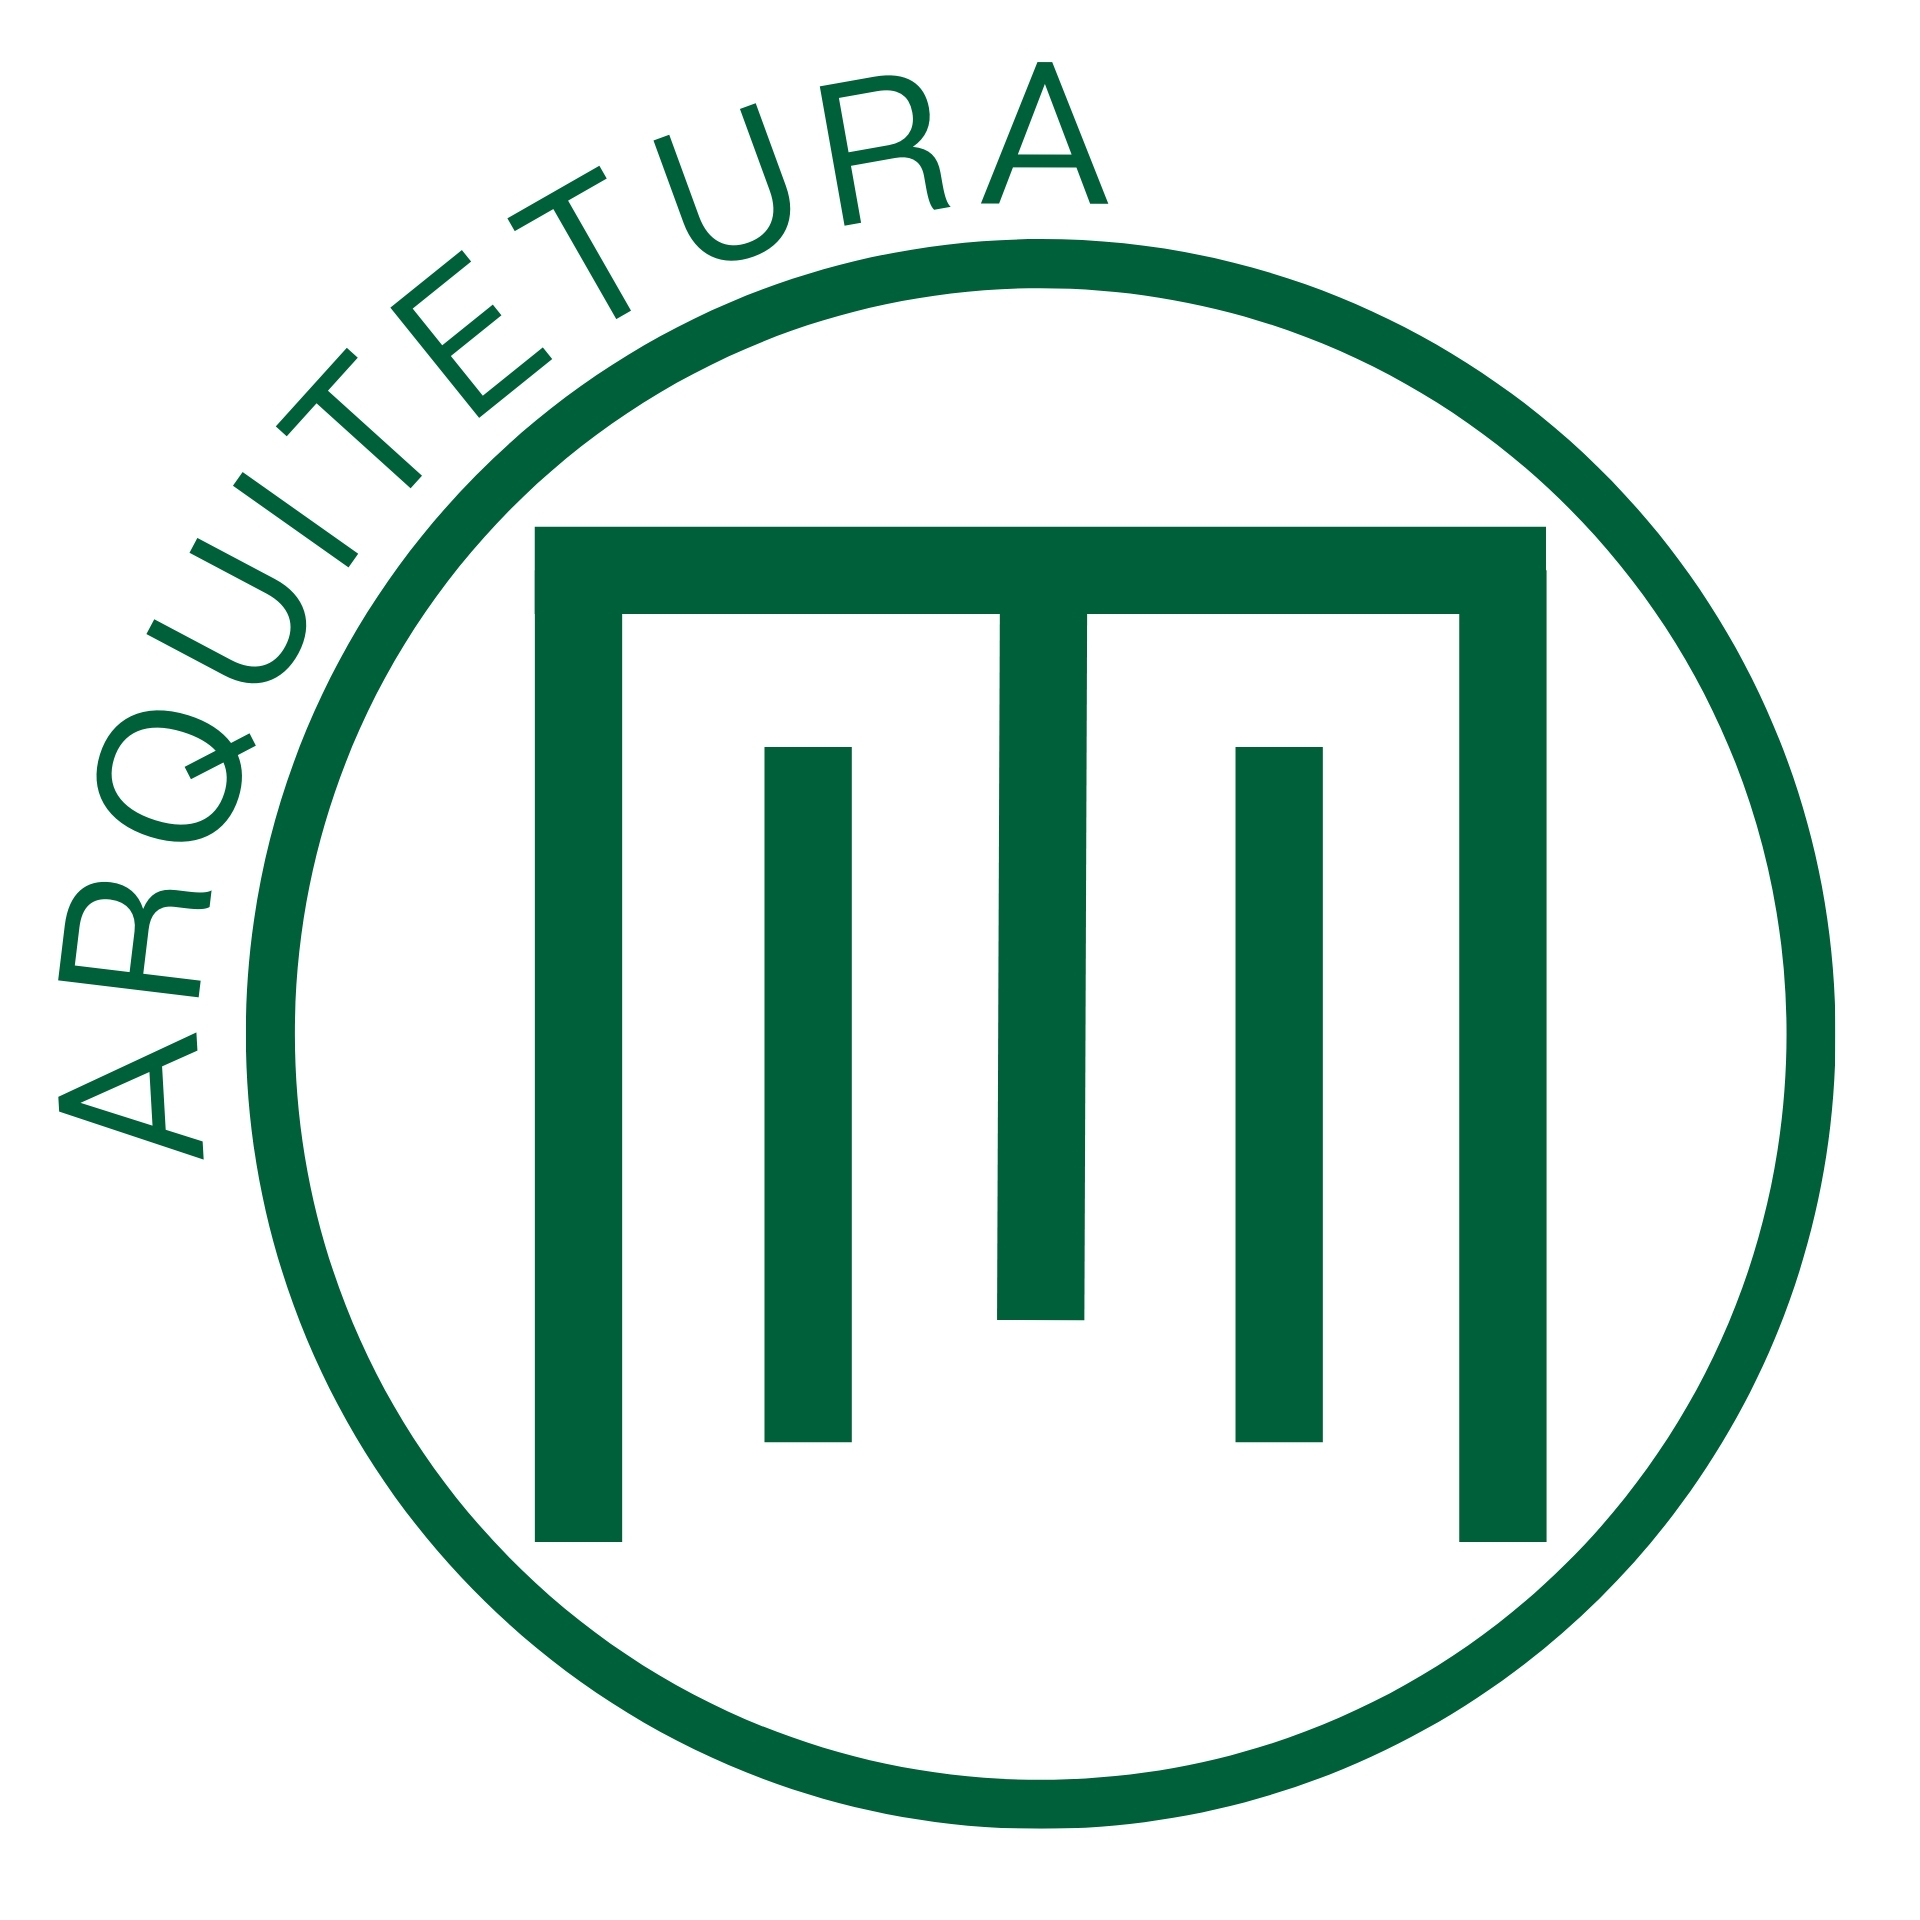 MM arquitetura - Caraguatatuba - Projetos